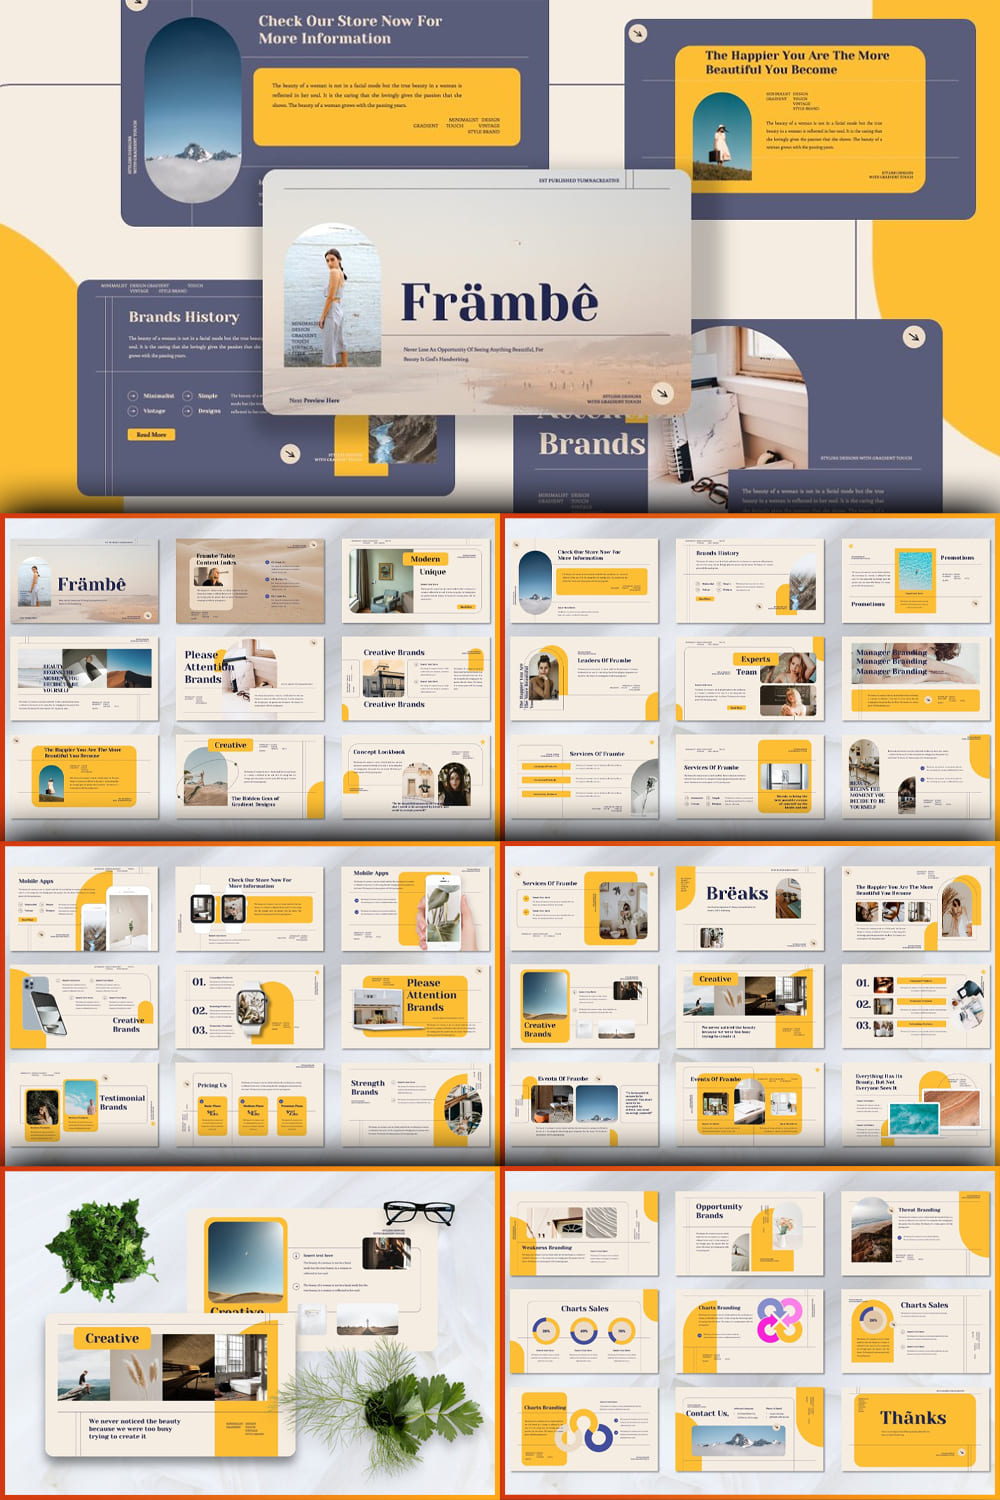 Frambe - Creative Brands Keynote pinterest image preview.